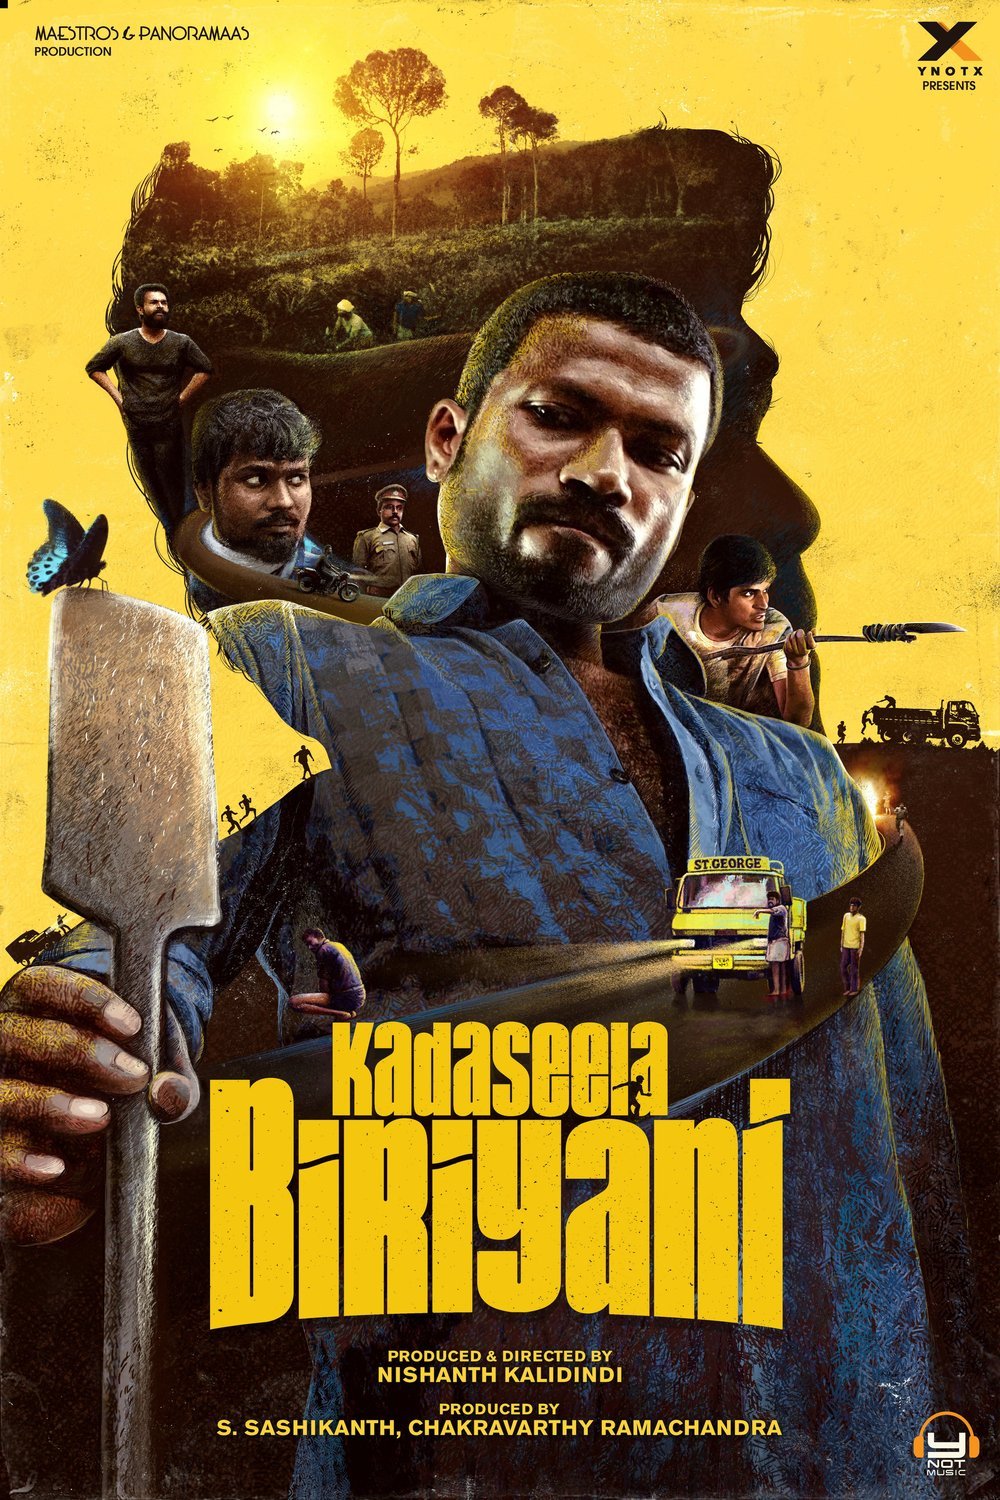 L'affiche originale du film Kadaseela Biriyani en Tamoul